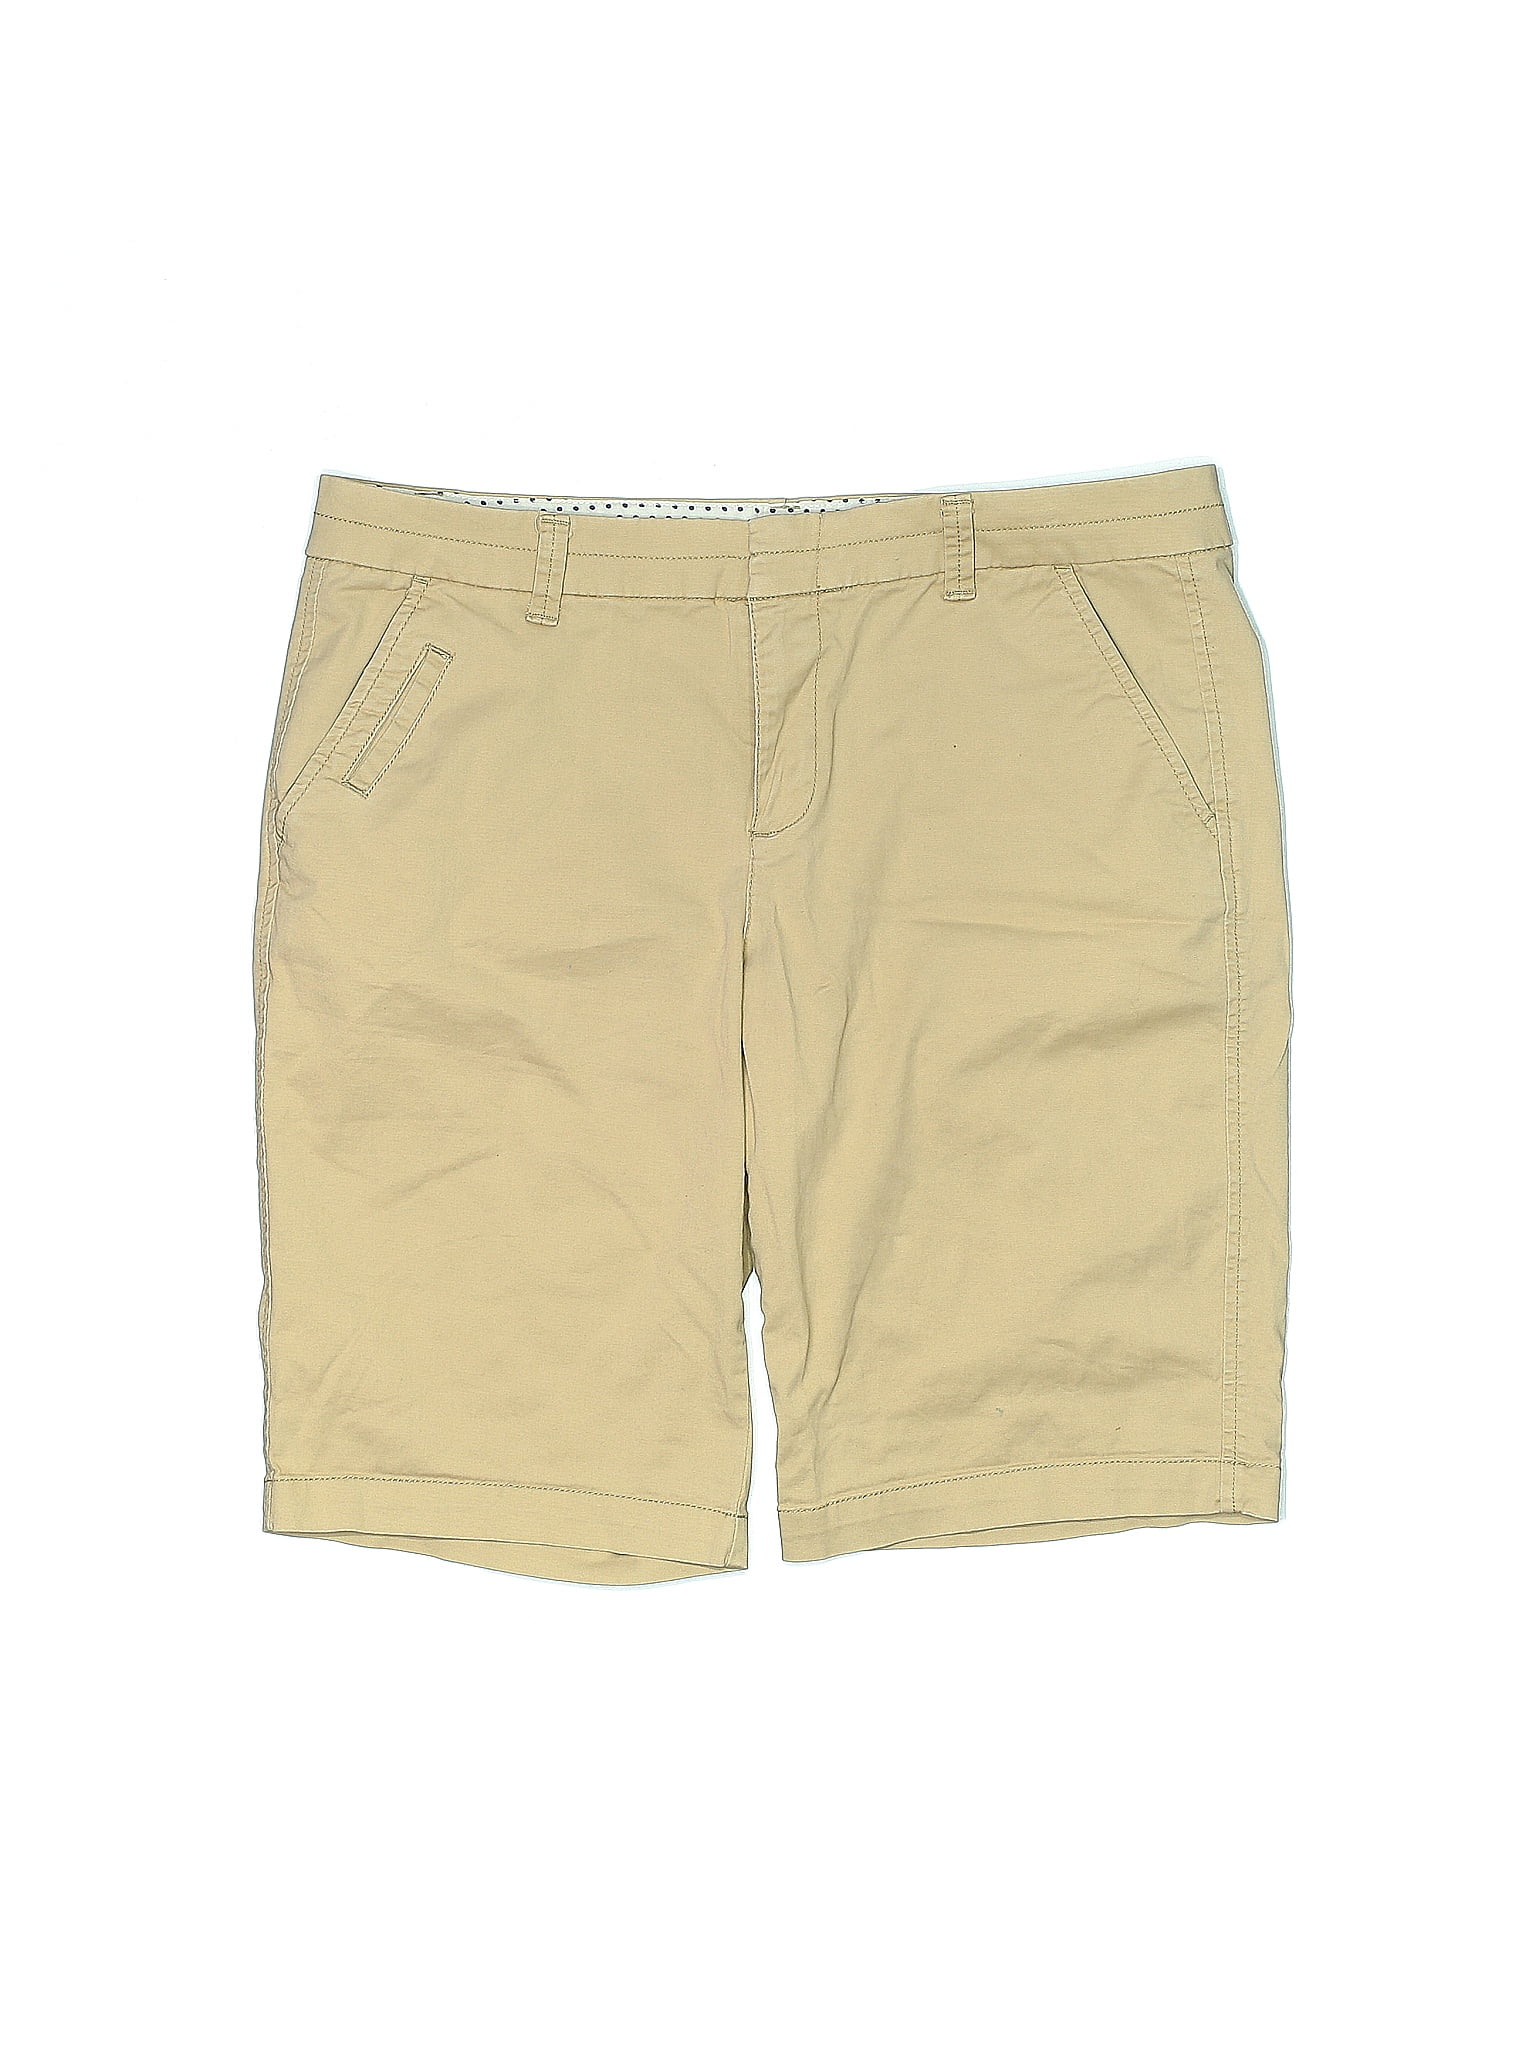 JCPenney Tan Khaki Shorts Size 10 - 36% off | thredUP